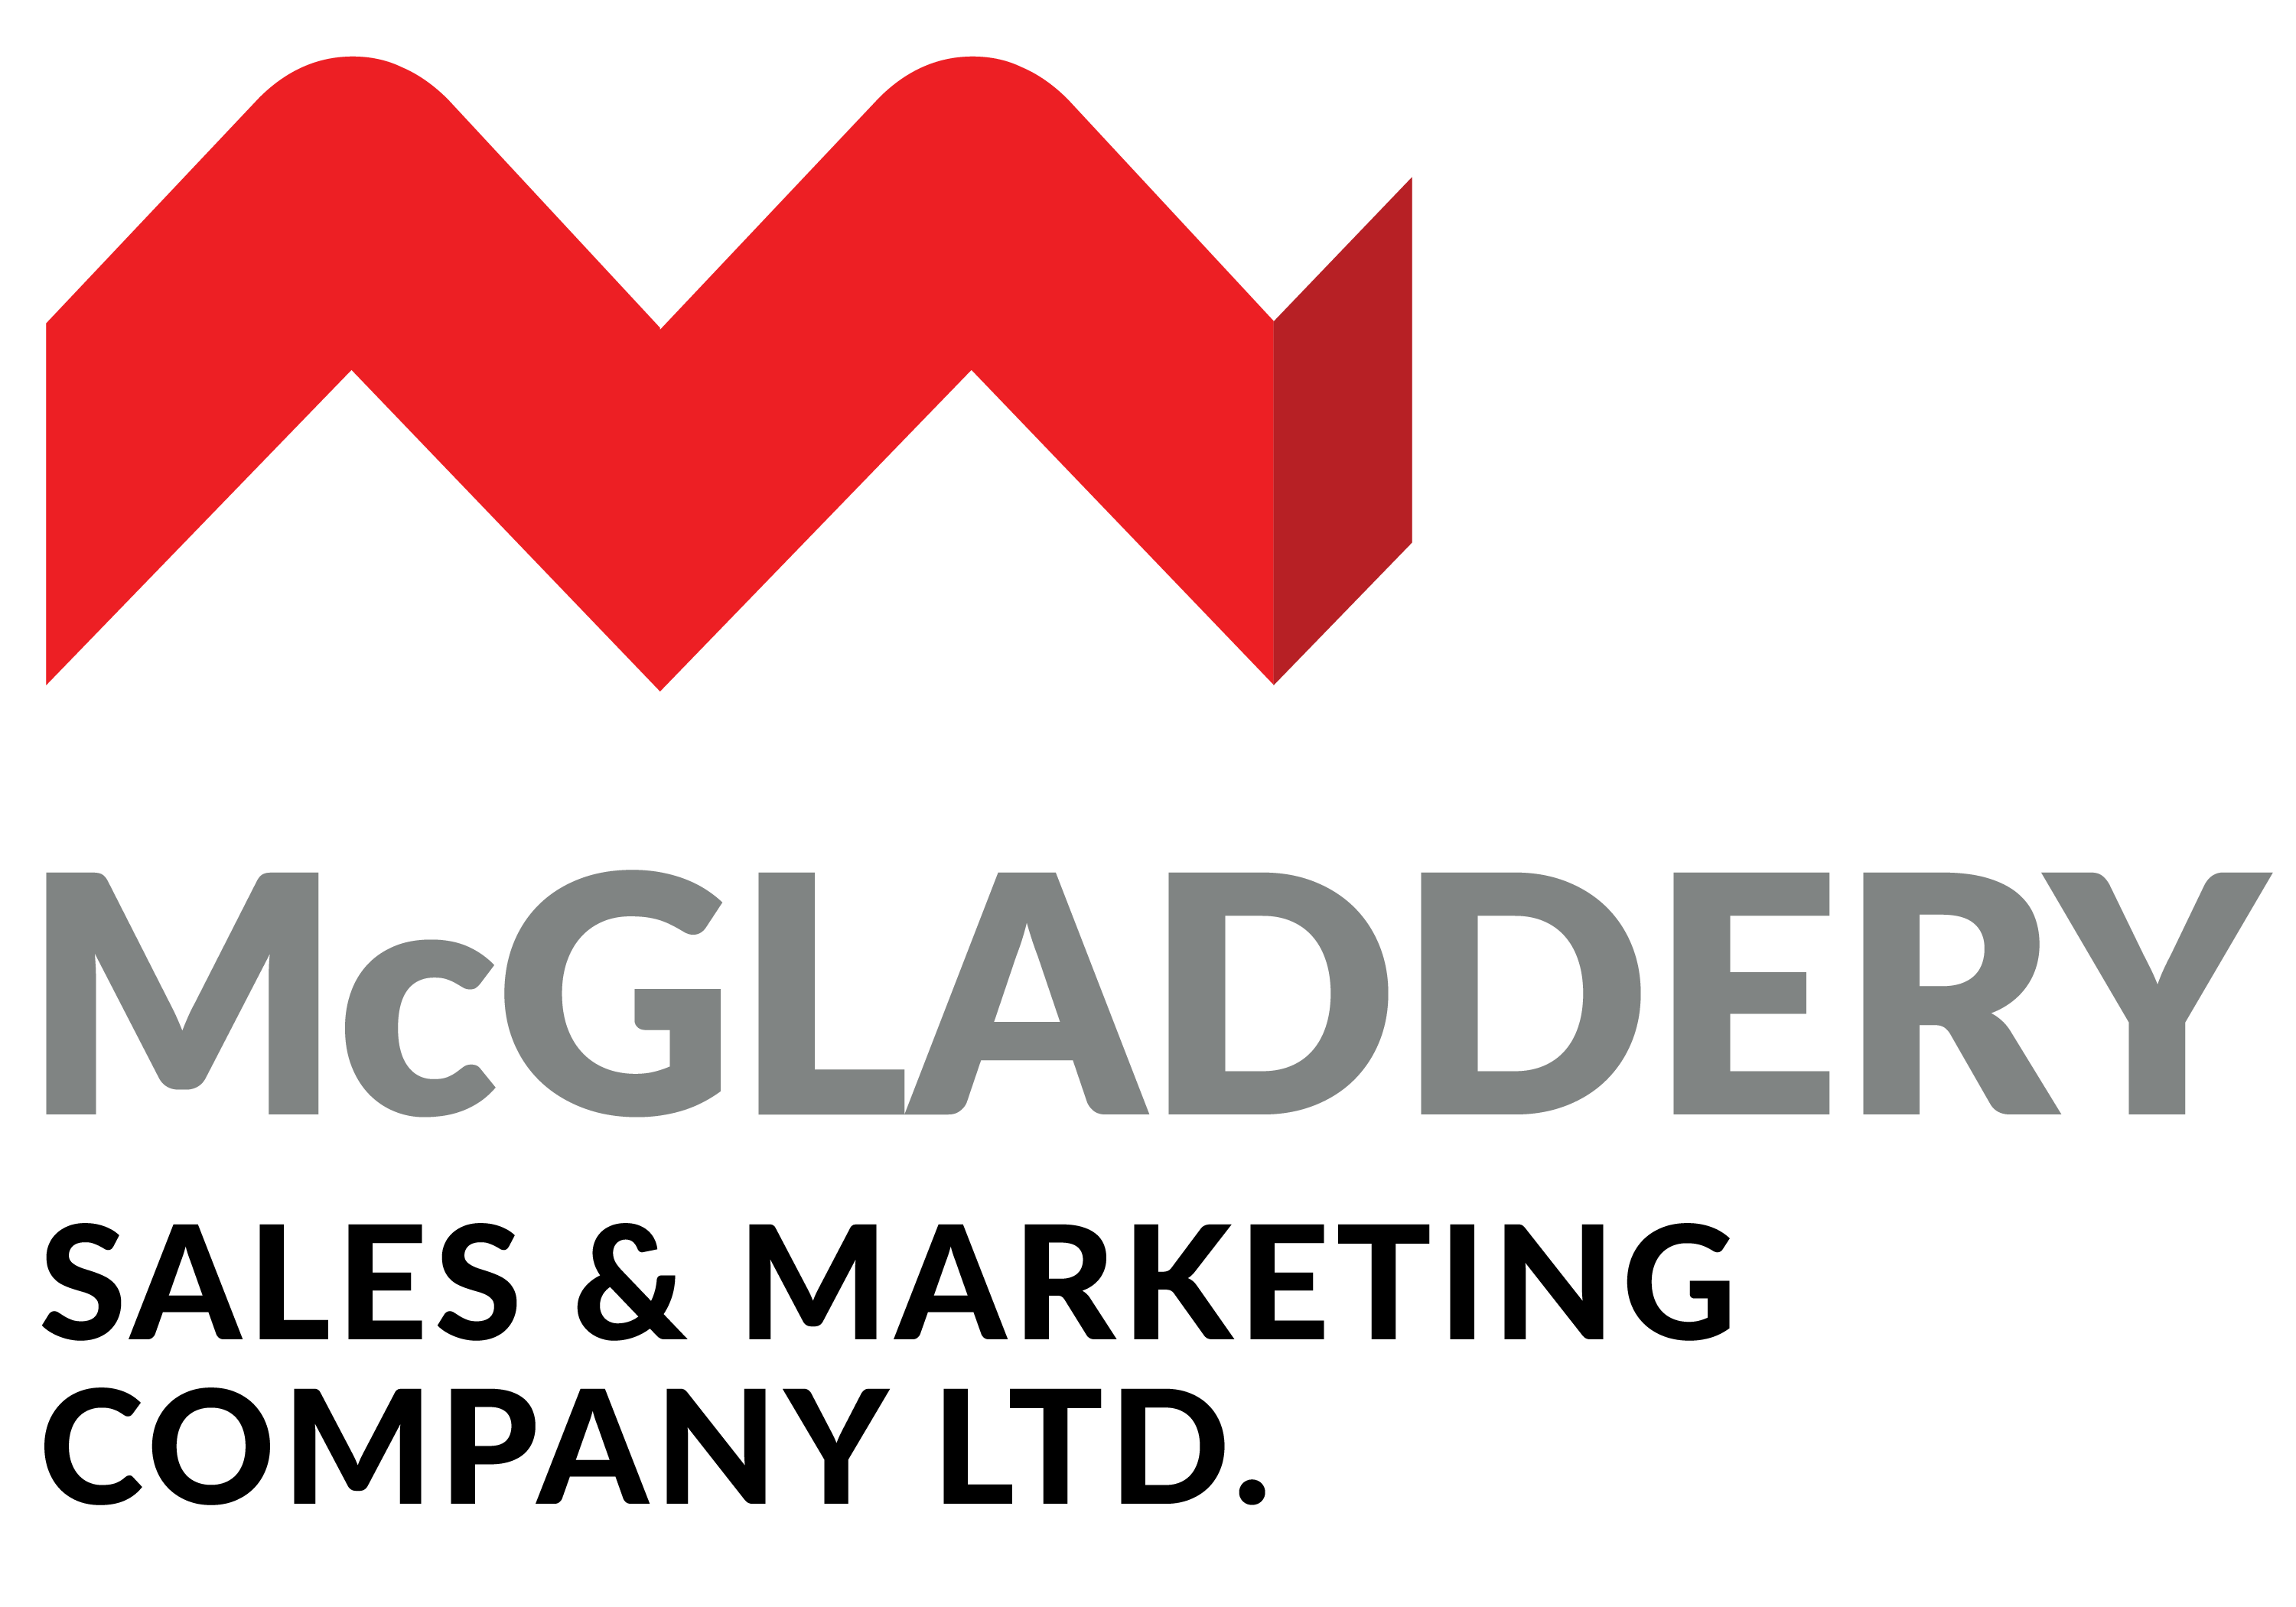 McGladdery sales